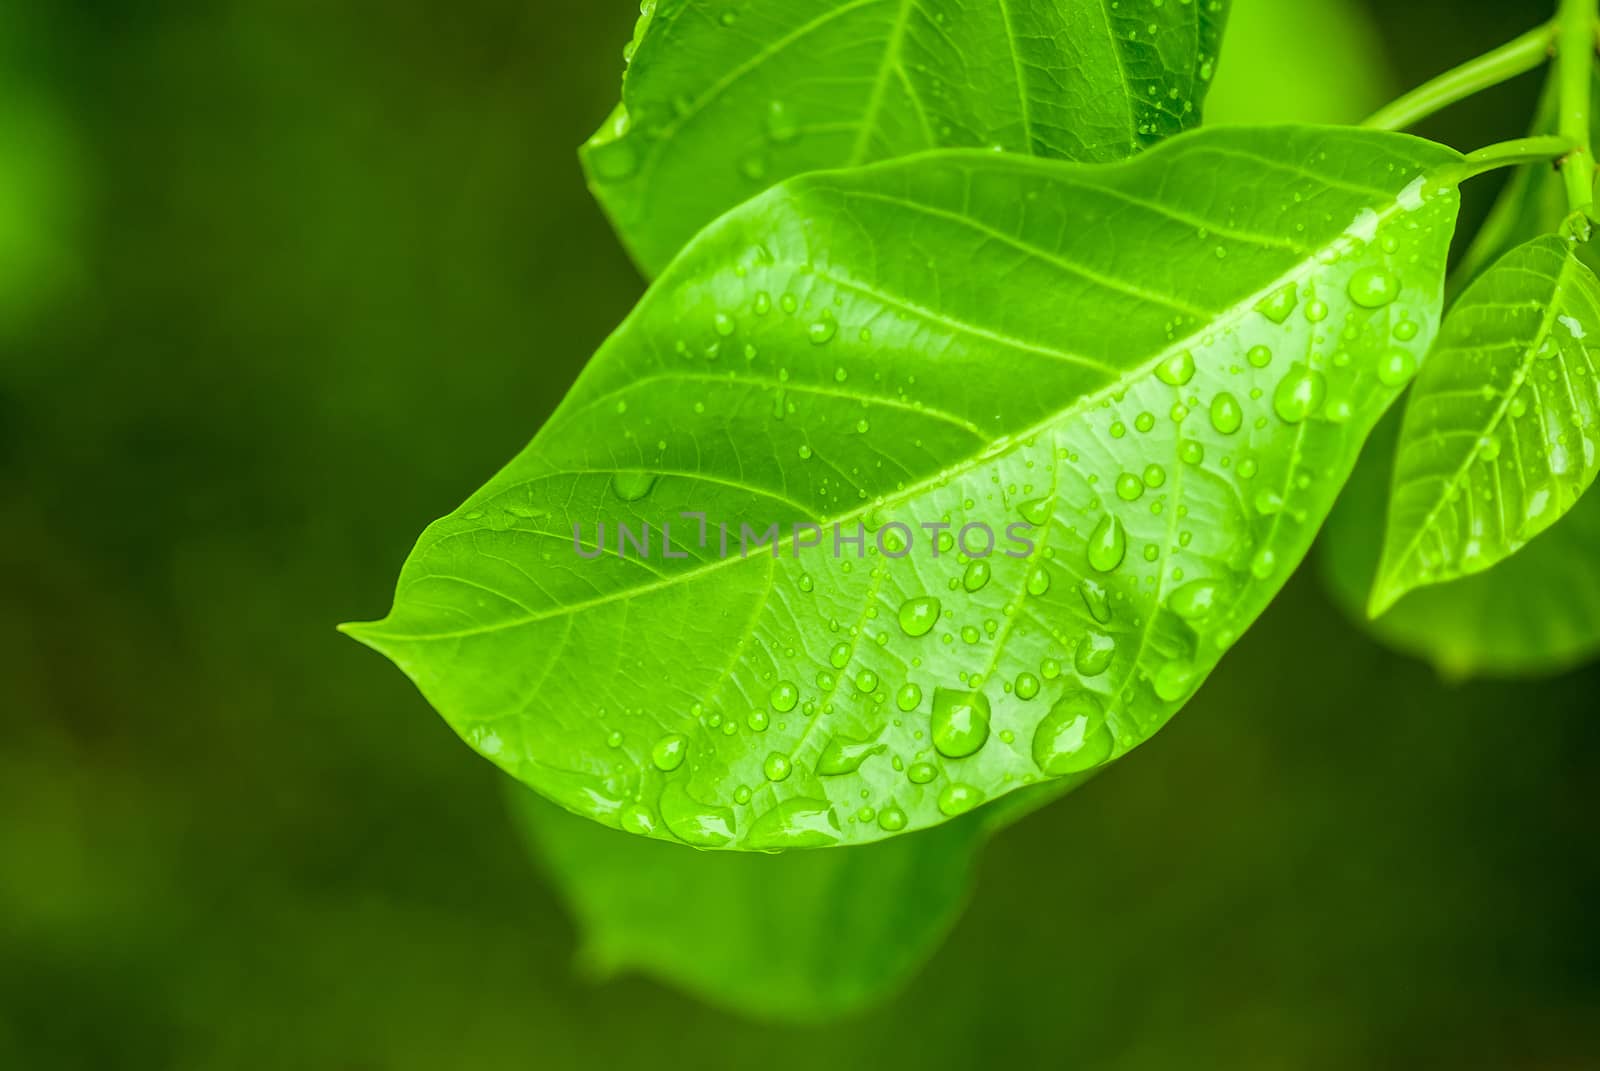 Water drop on leaf by seksan44